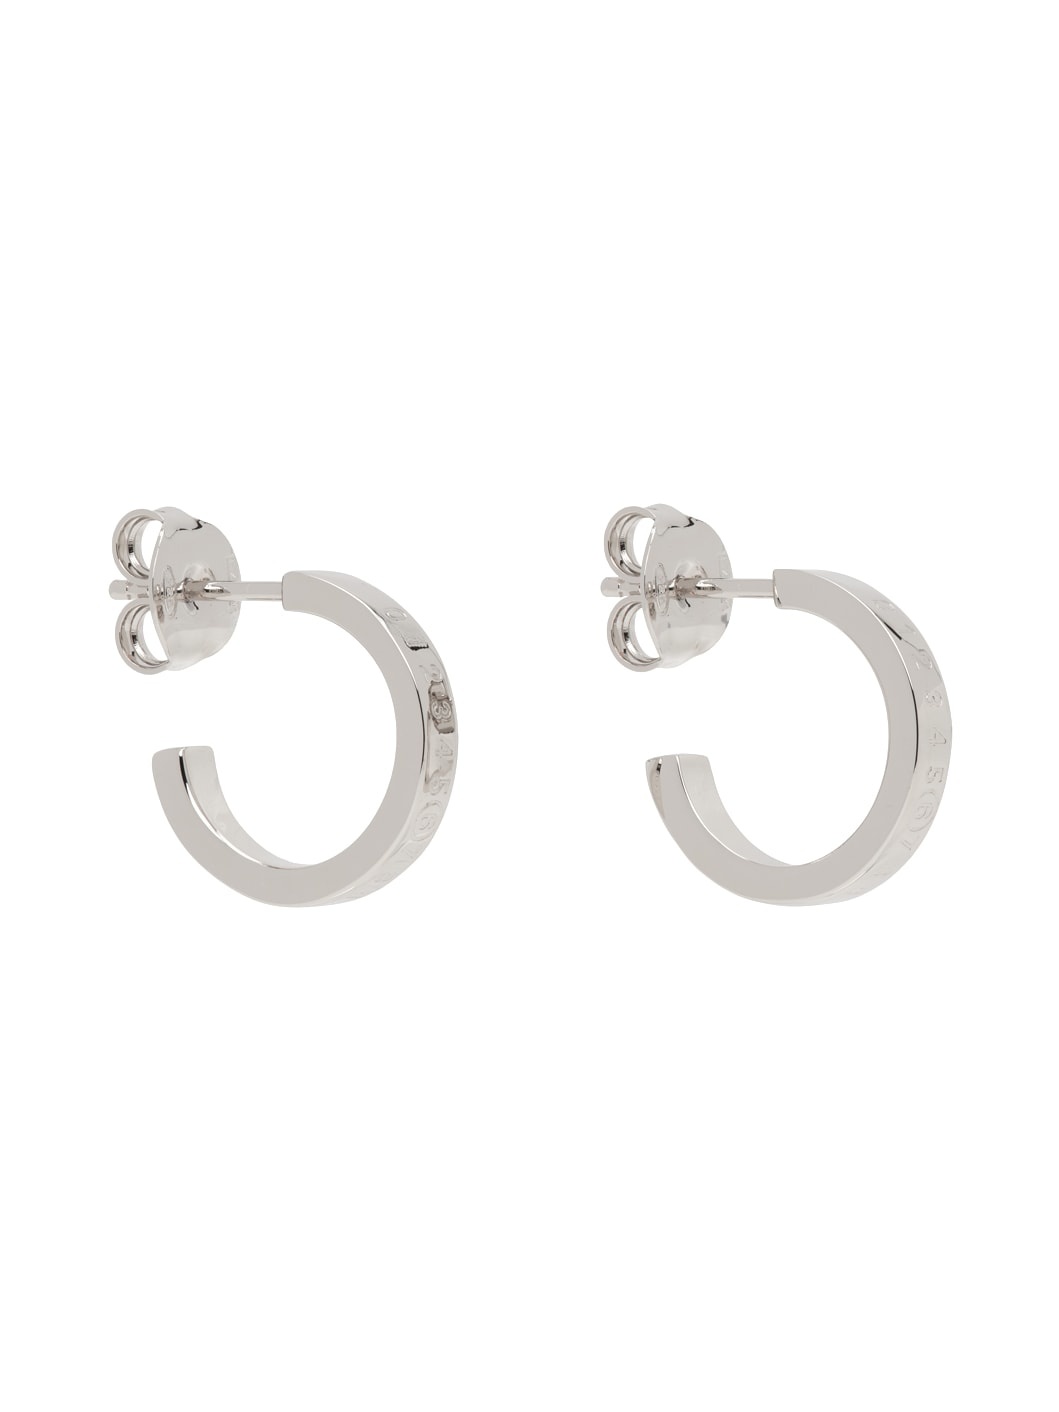 Silver Numeric Minimal Signature Hoop Earrings - 2